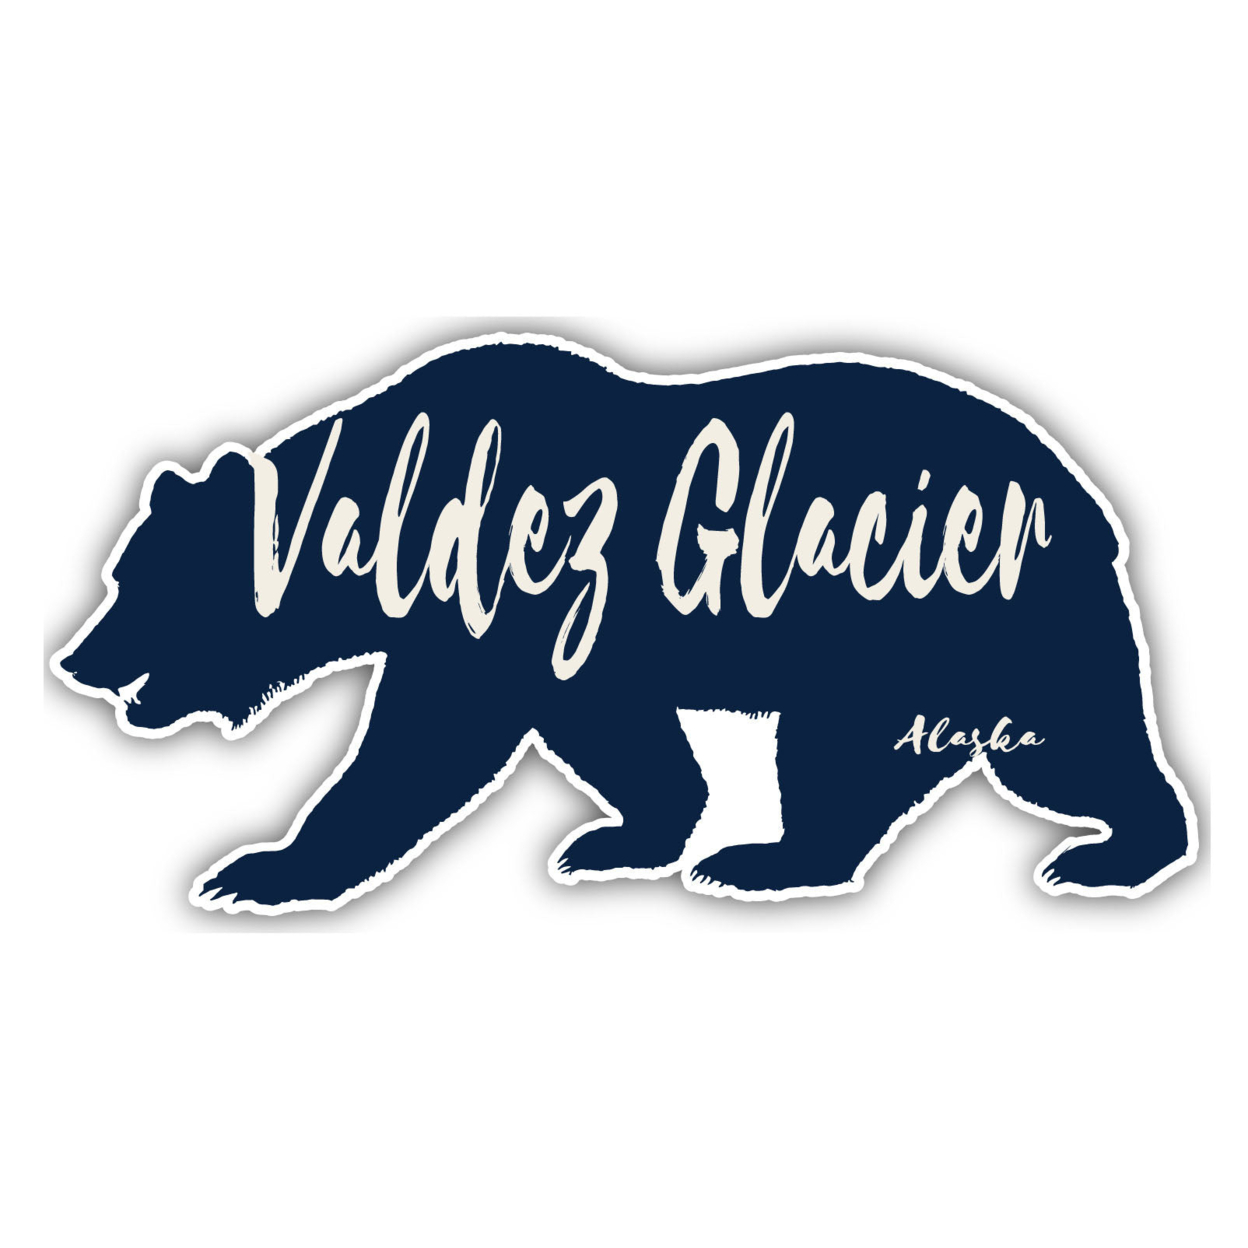 Valdez Glacier Alaska Souvenir Decorative Stickers (Choose Theme And Size) - Single Unit, 4-Inch, Bear